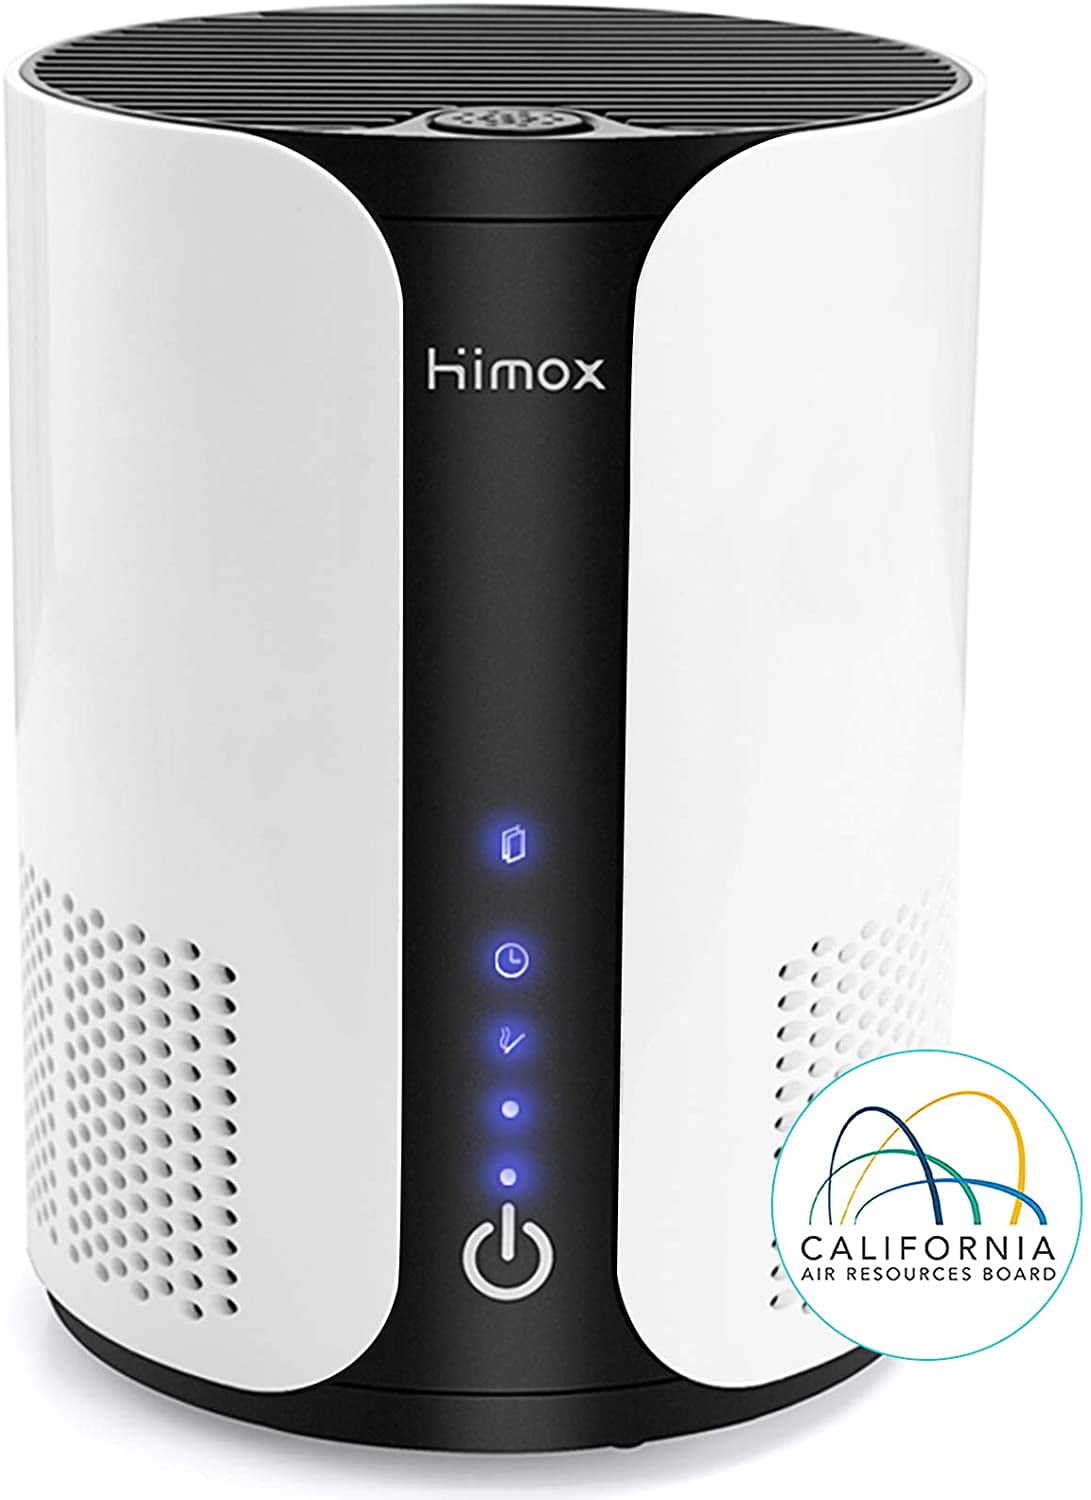 HIMOX AP01 Compact Air Purifier Medical Grade Filtration H13 True HEPA